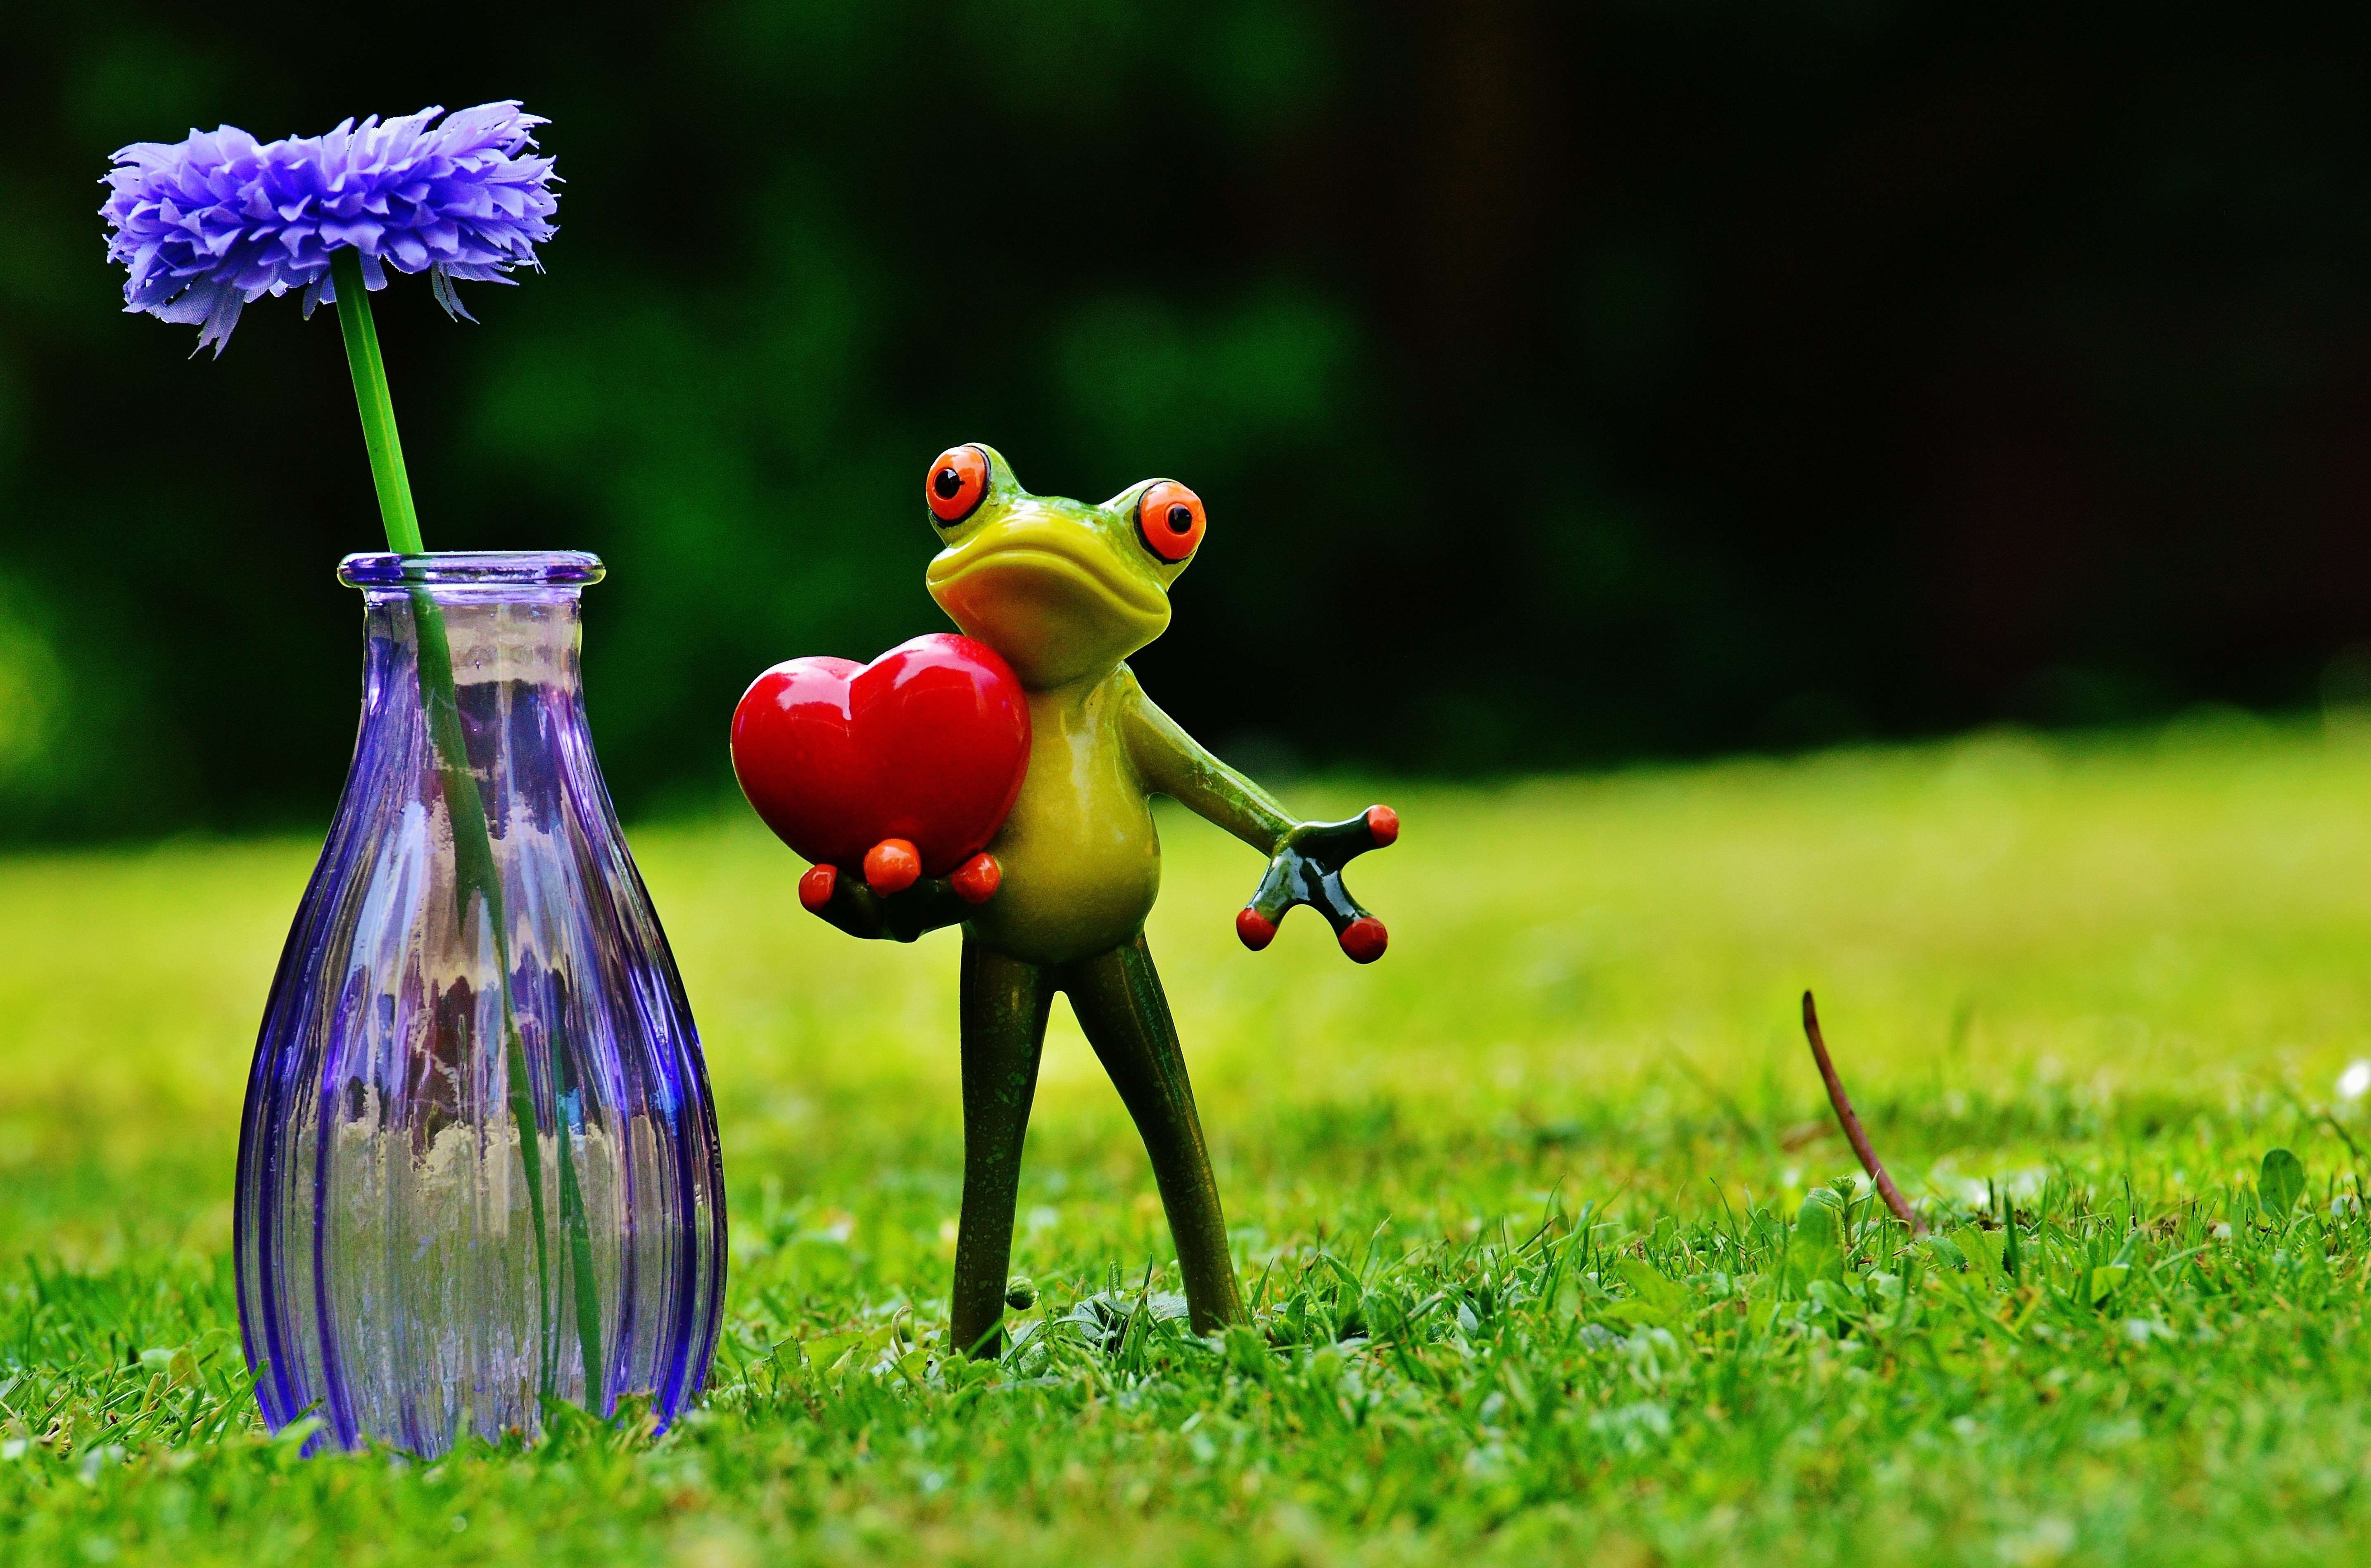 Vase, Love, Valentine'S Day, Frog, grass, no people